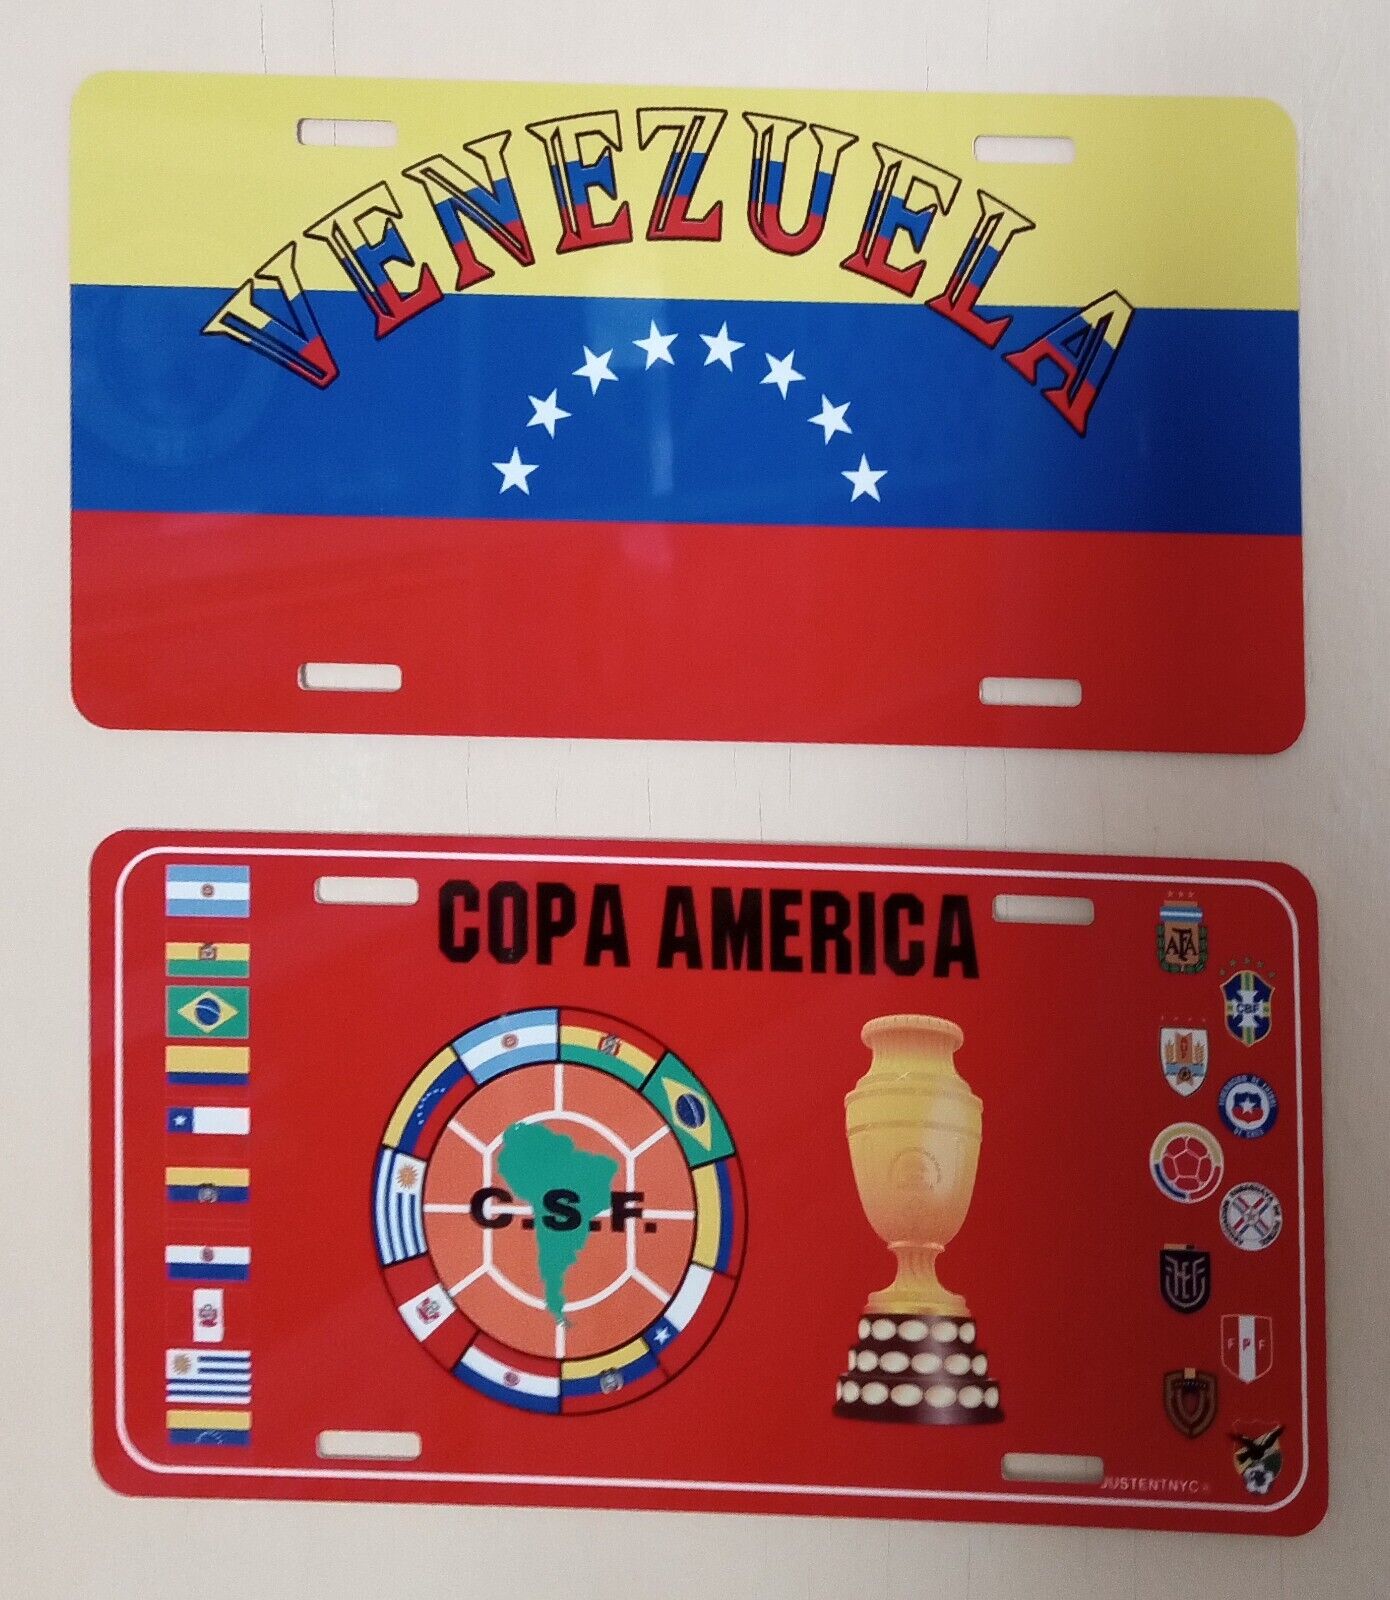 2 VENEZUELA GIFTS: 1 VENEZUELA LICENSE PLATE + 1 COPA AMERICA LICENSE PLATE $30